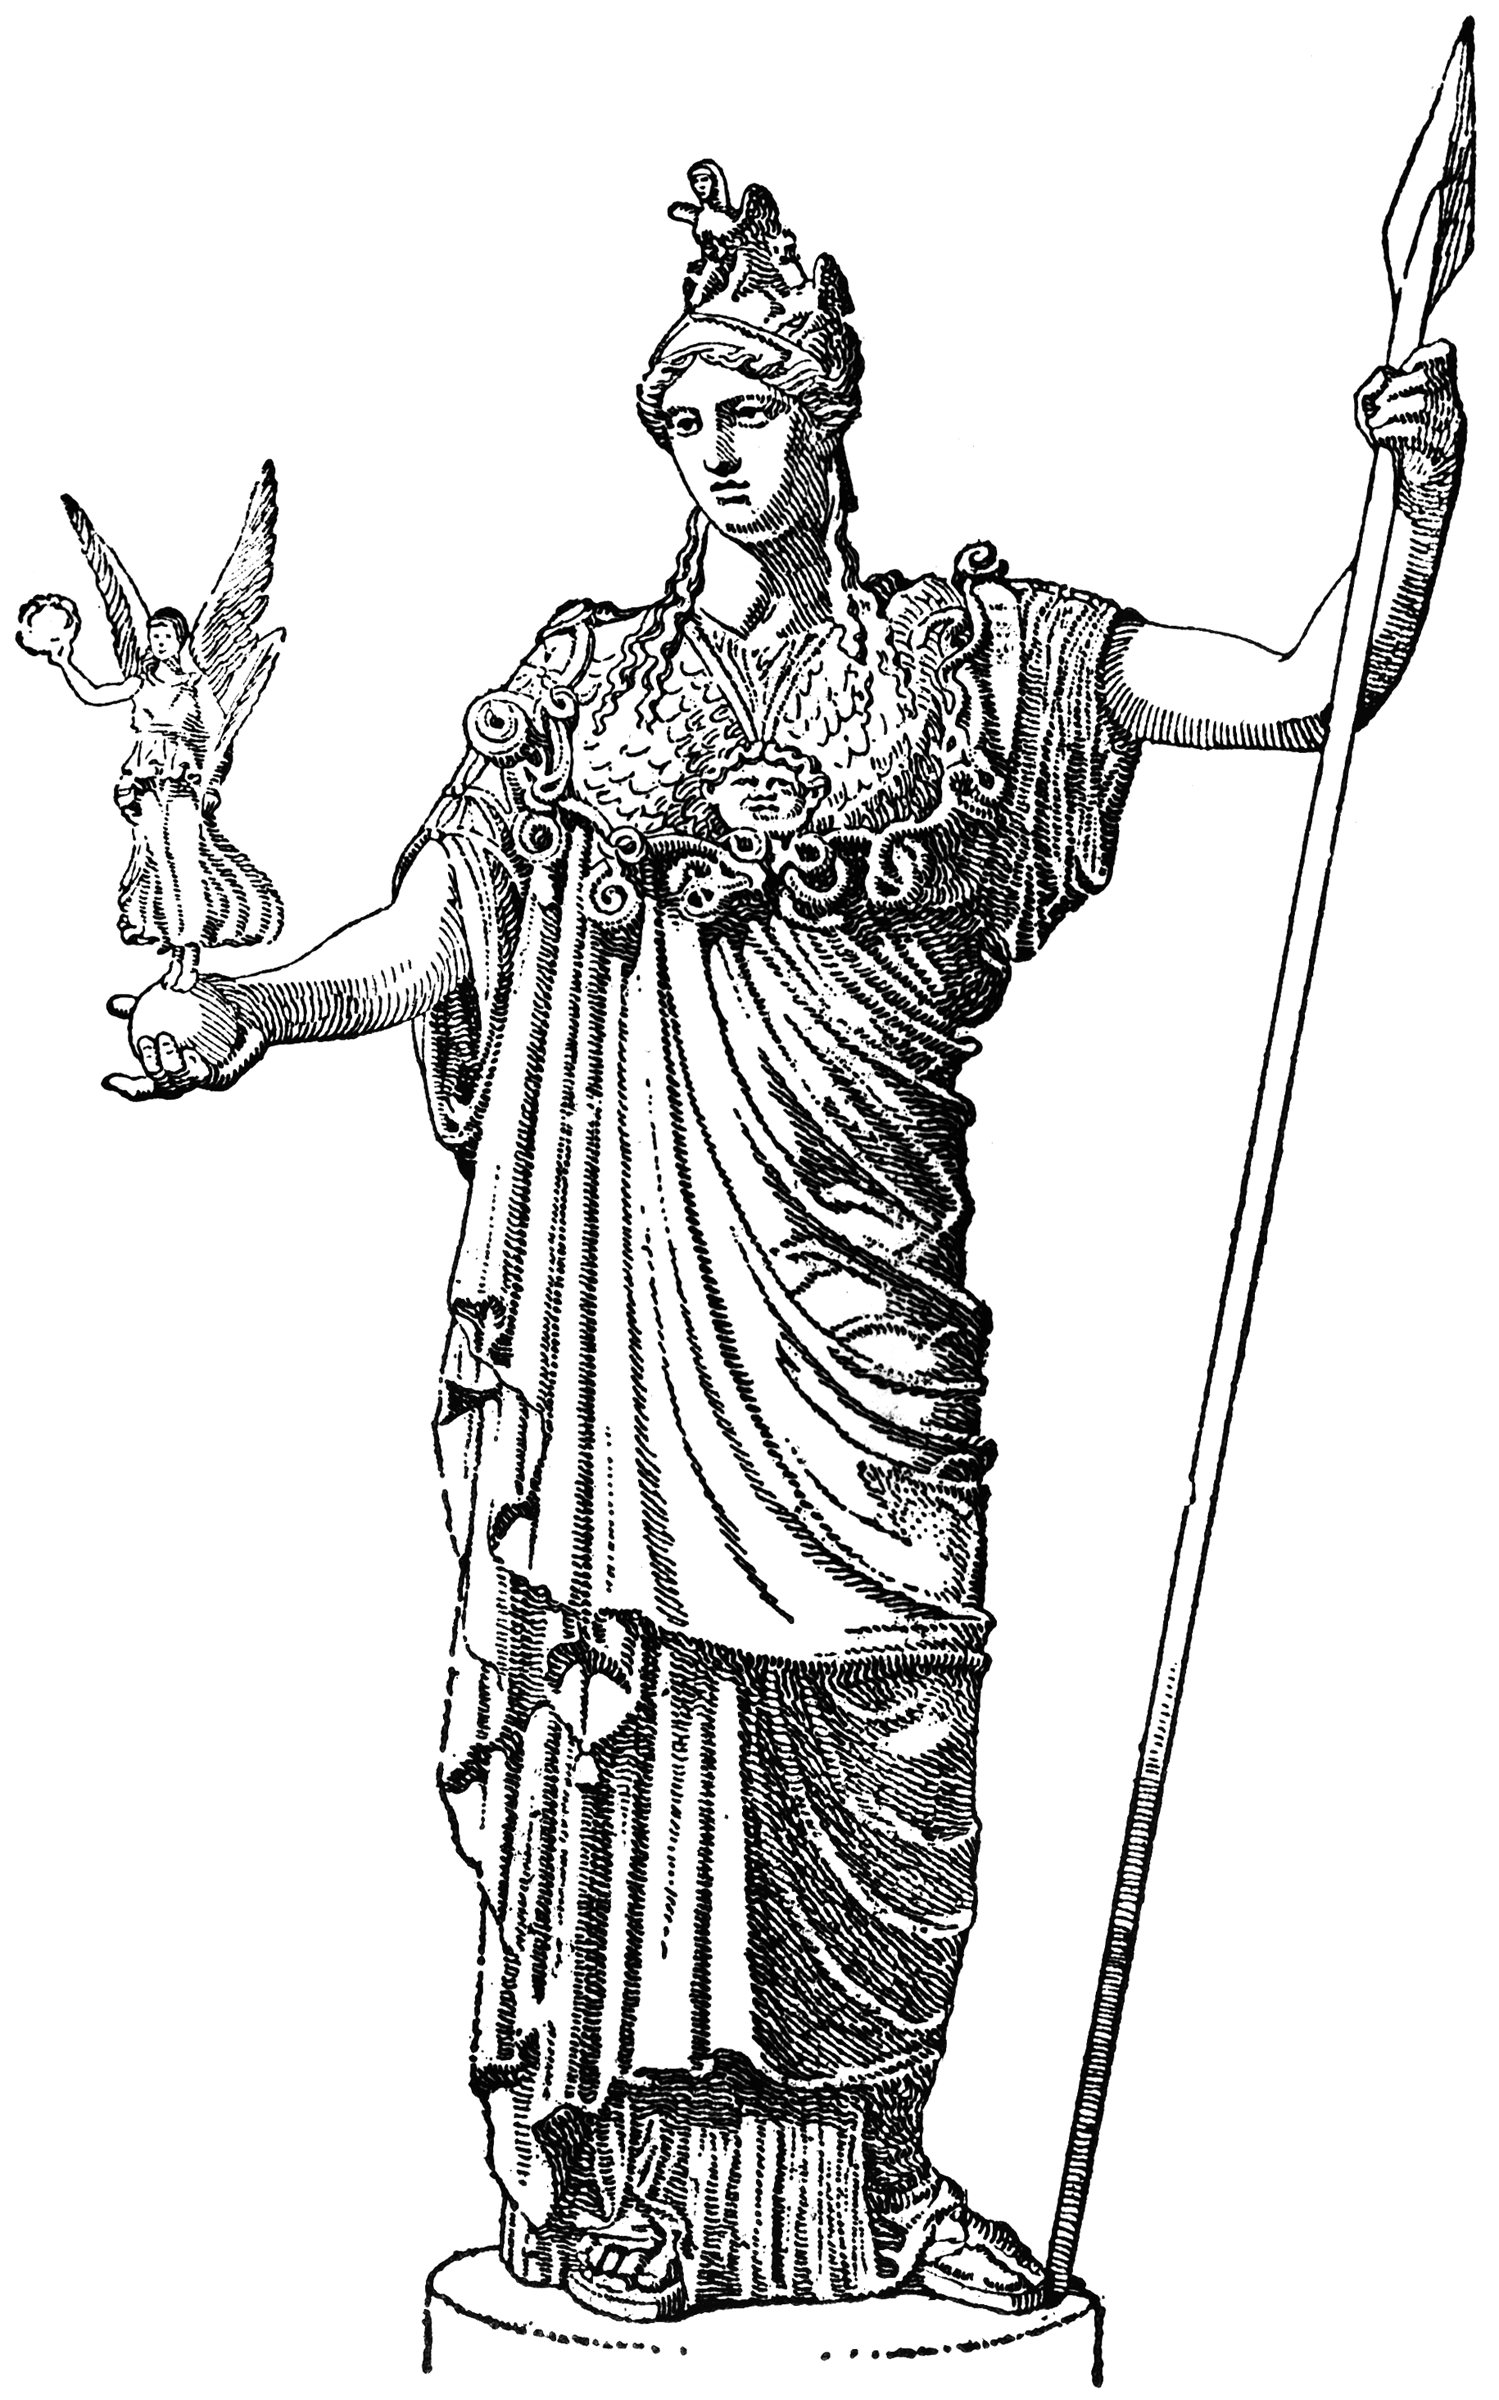 Рисунок бога древнего рима. Афина богиня древней Греции. Афина-Паллада (Минерва). Боги древней Греции Афина Паллада. Афина Паллада мифология.